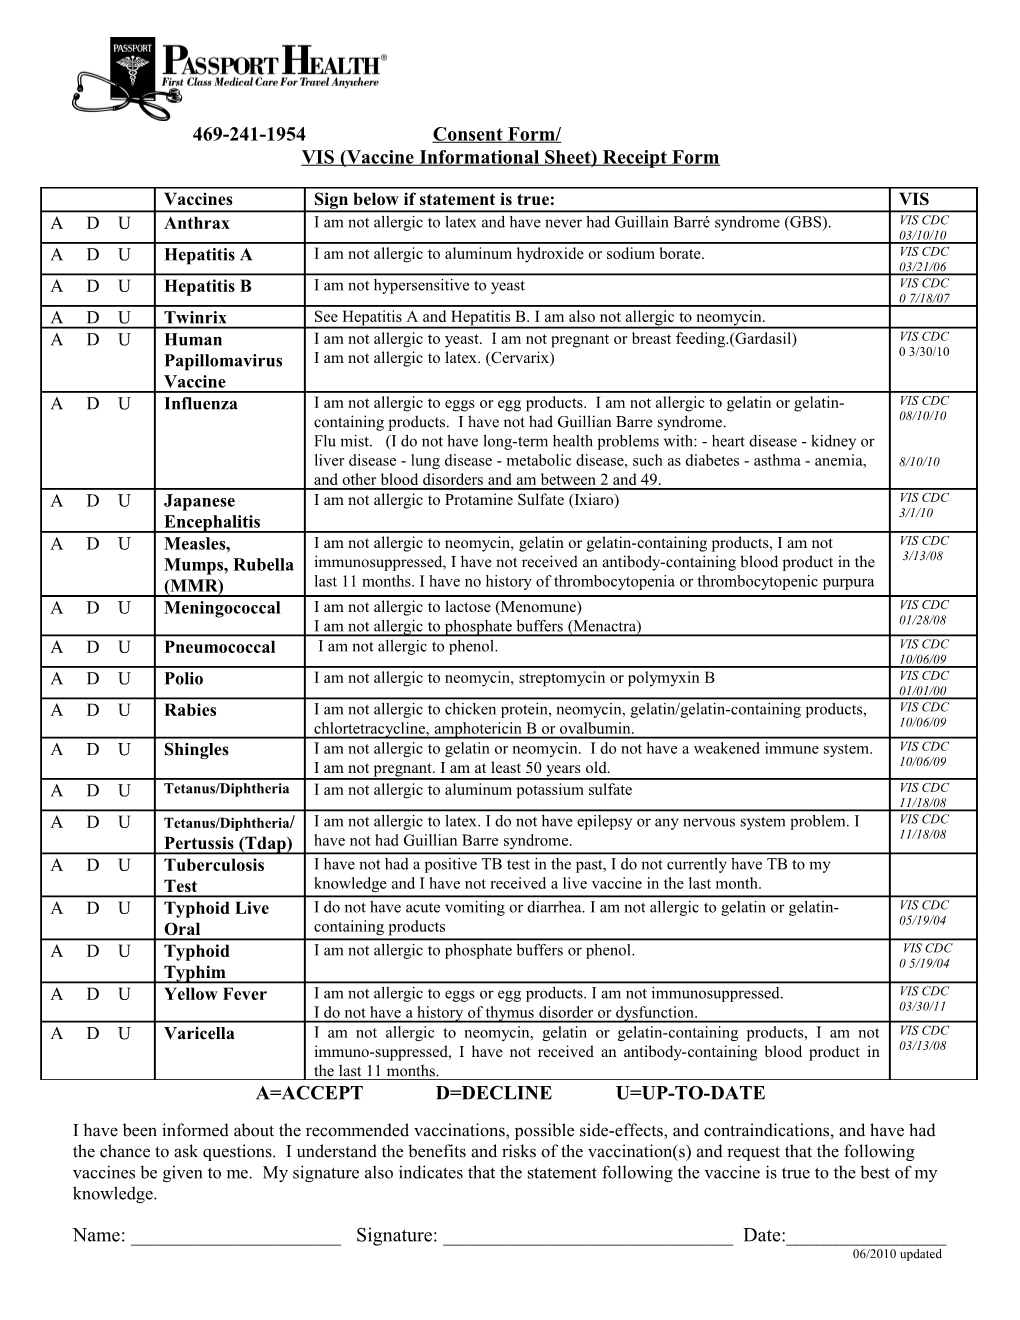 VIS (Vaccine Informational Sheet) Receipt Form